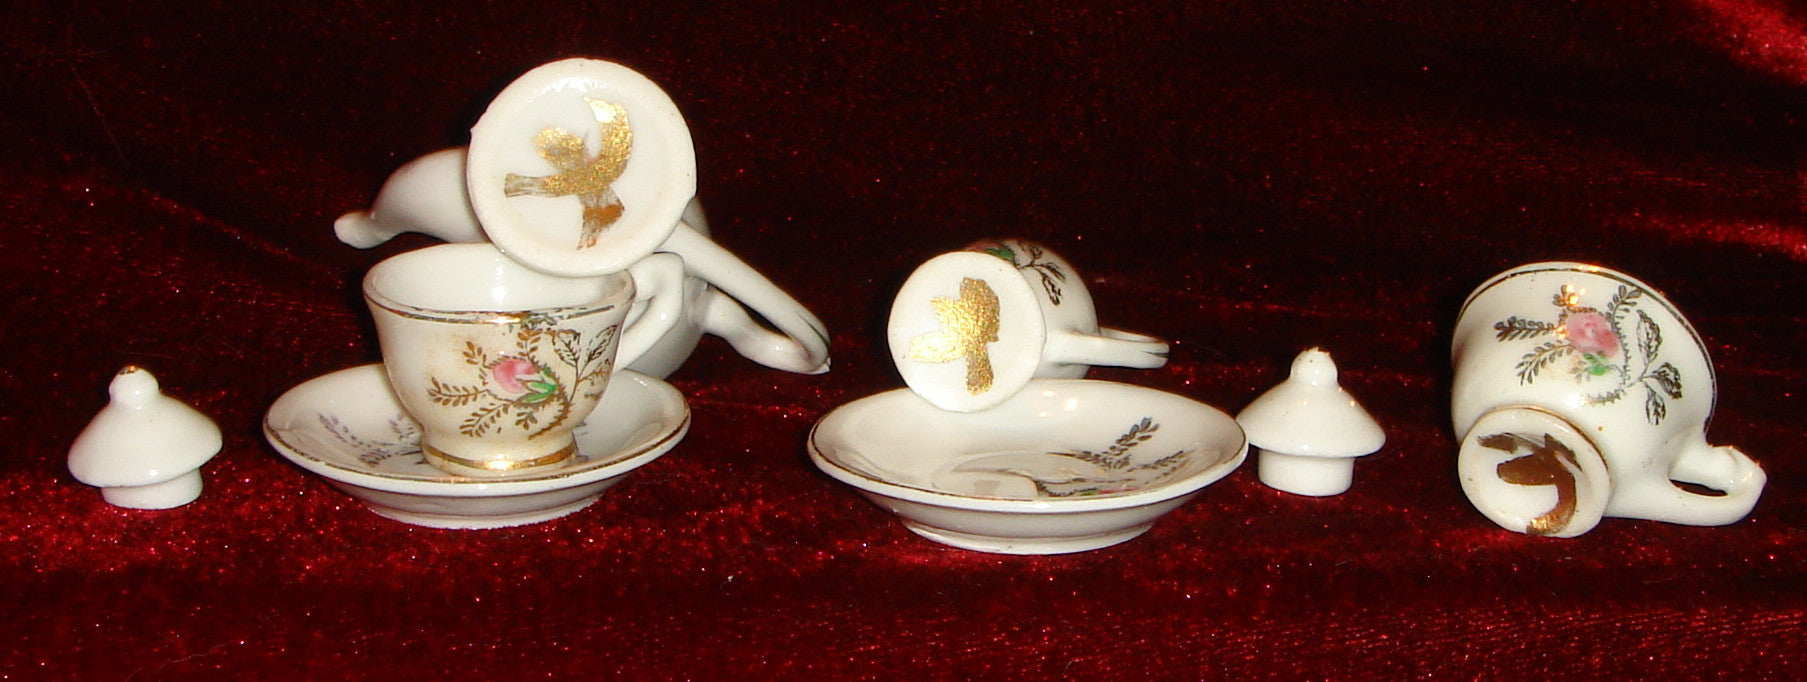 Miniature Gilded China Tea Set (8)